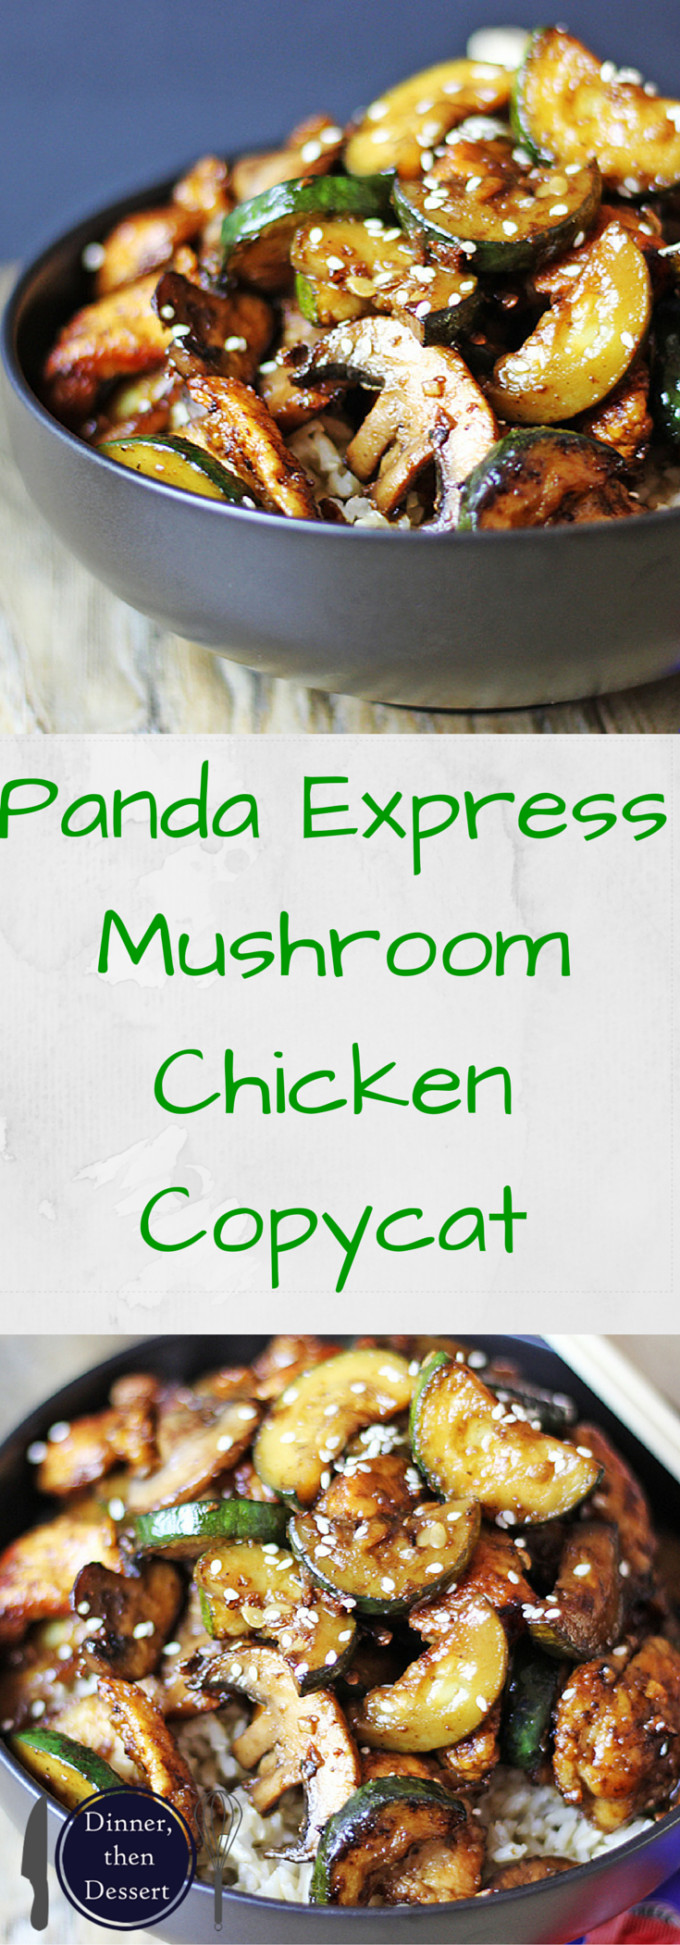 Dinner Then Dessert
 Panda Express Mushroom Chicken Dinner then Dessert